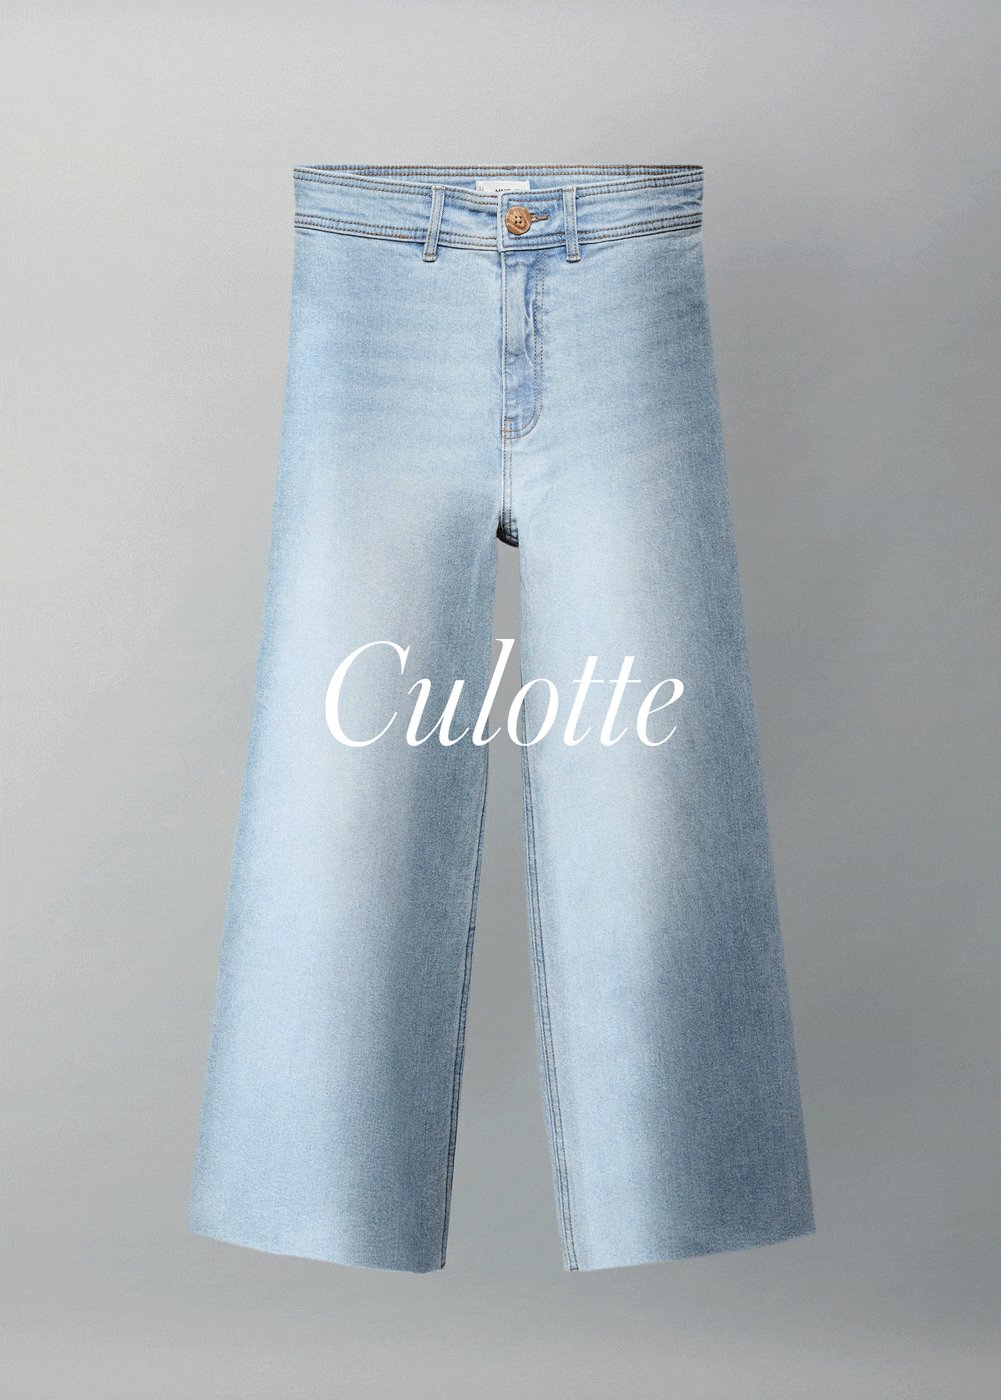  Mango Çocuk Yüksek Bel Culotte Jean Pantolon Açık Mavi